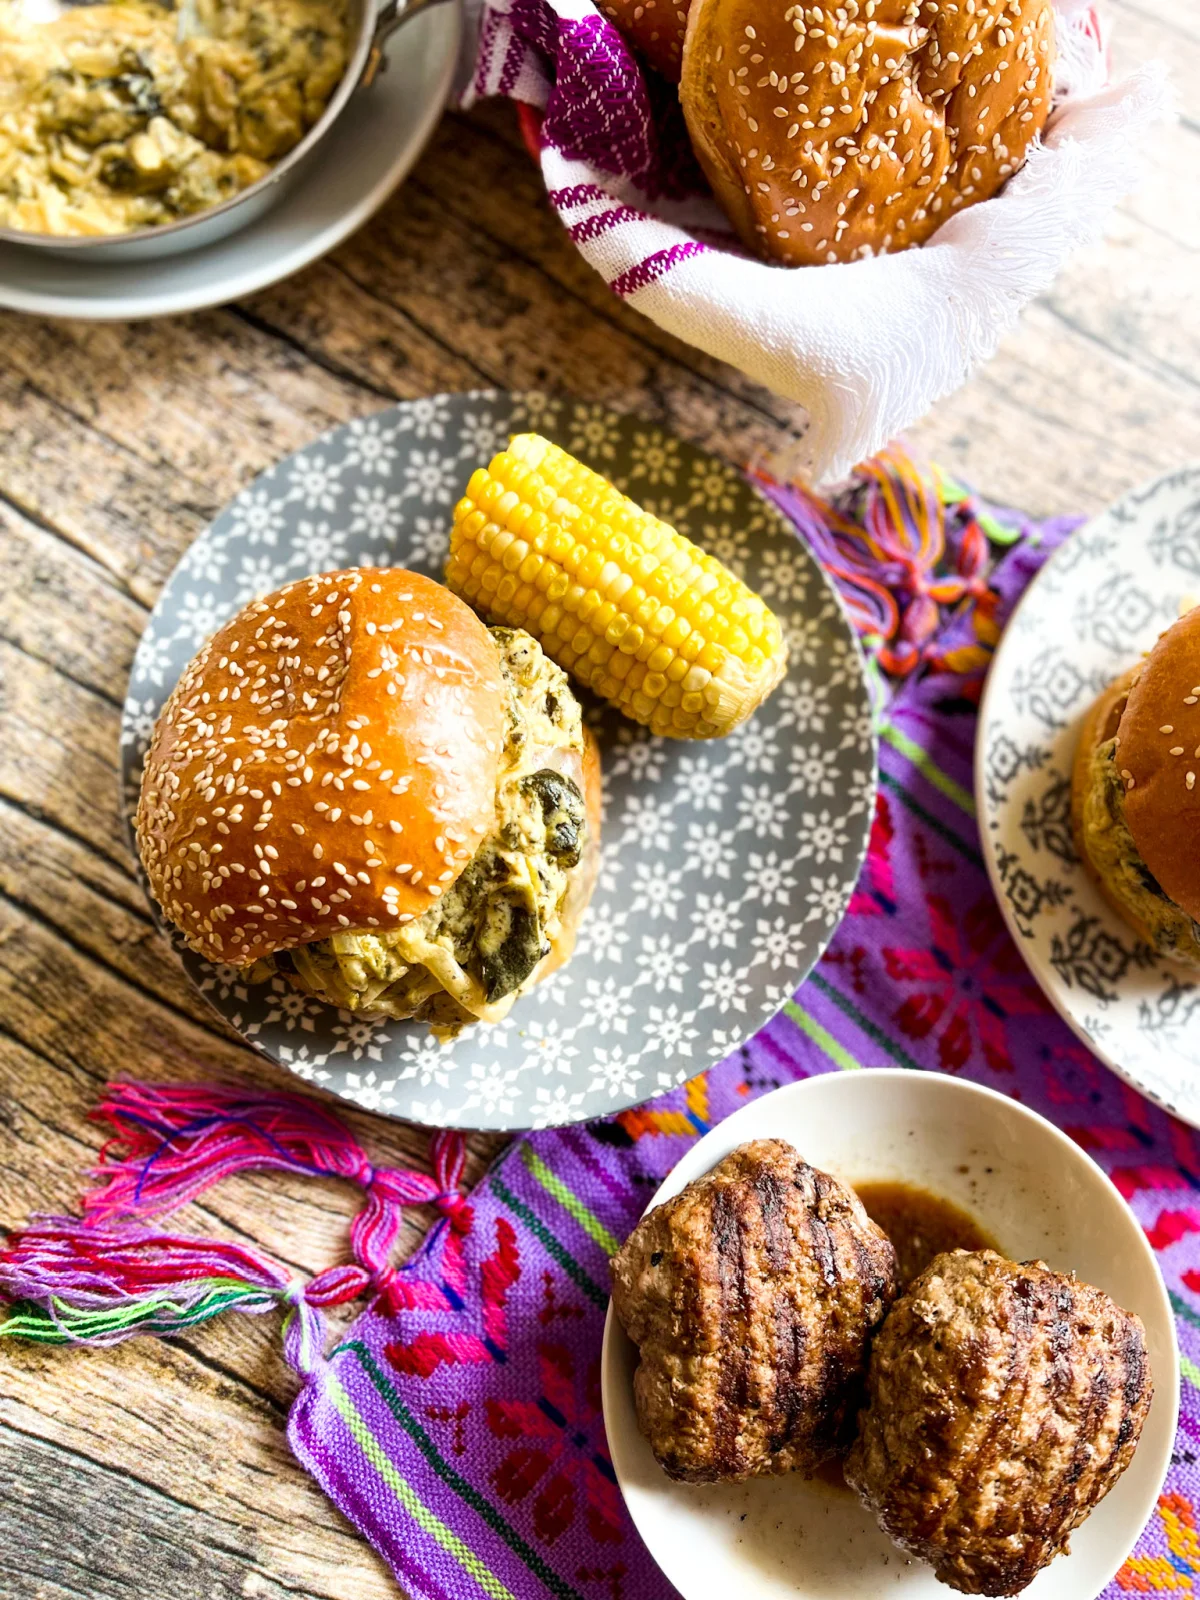 Juicy Veal Burgers Recipe - Adriana's Best Recipes